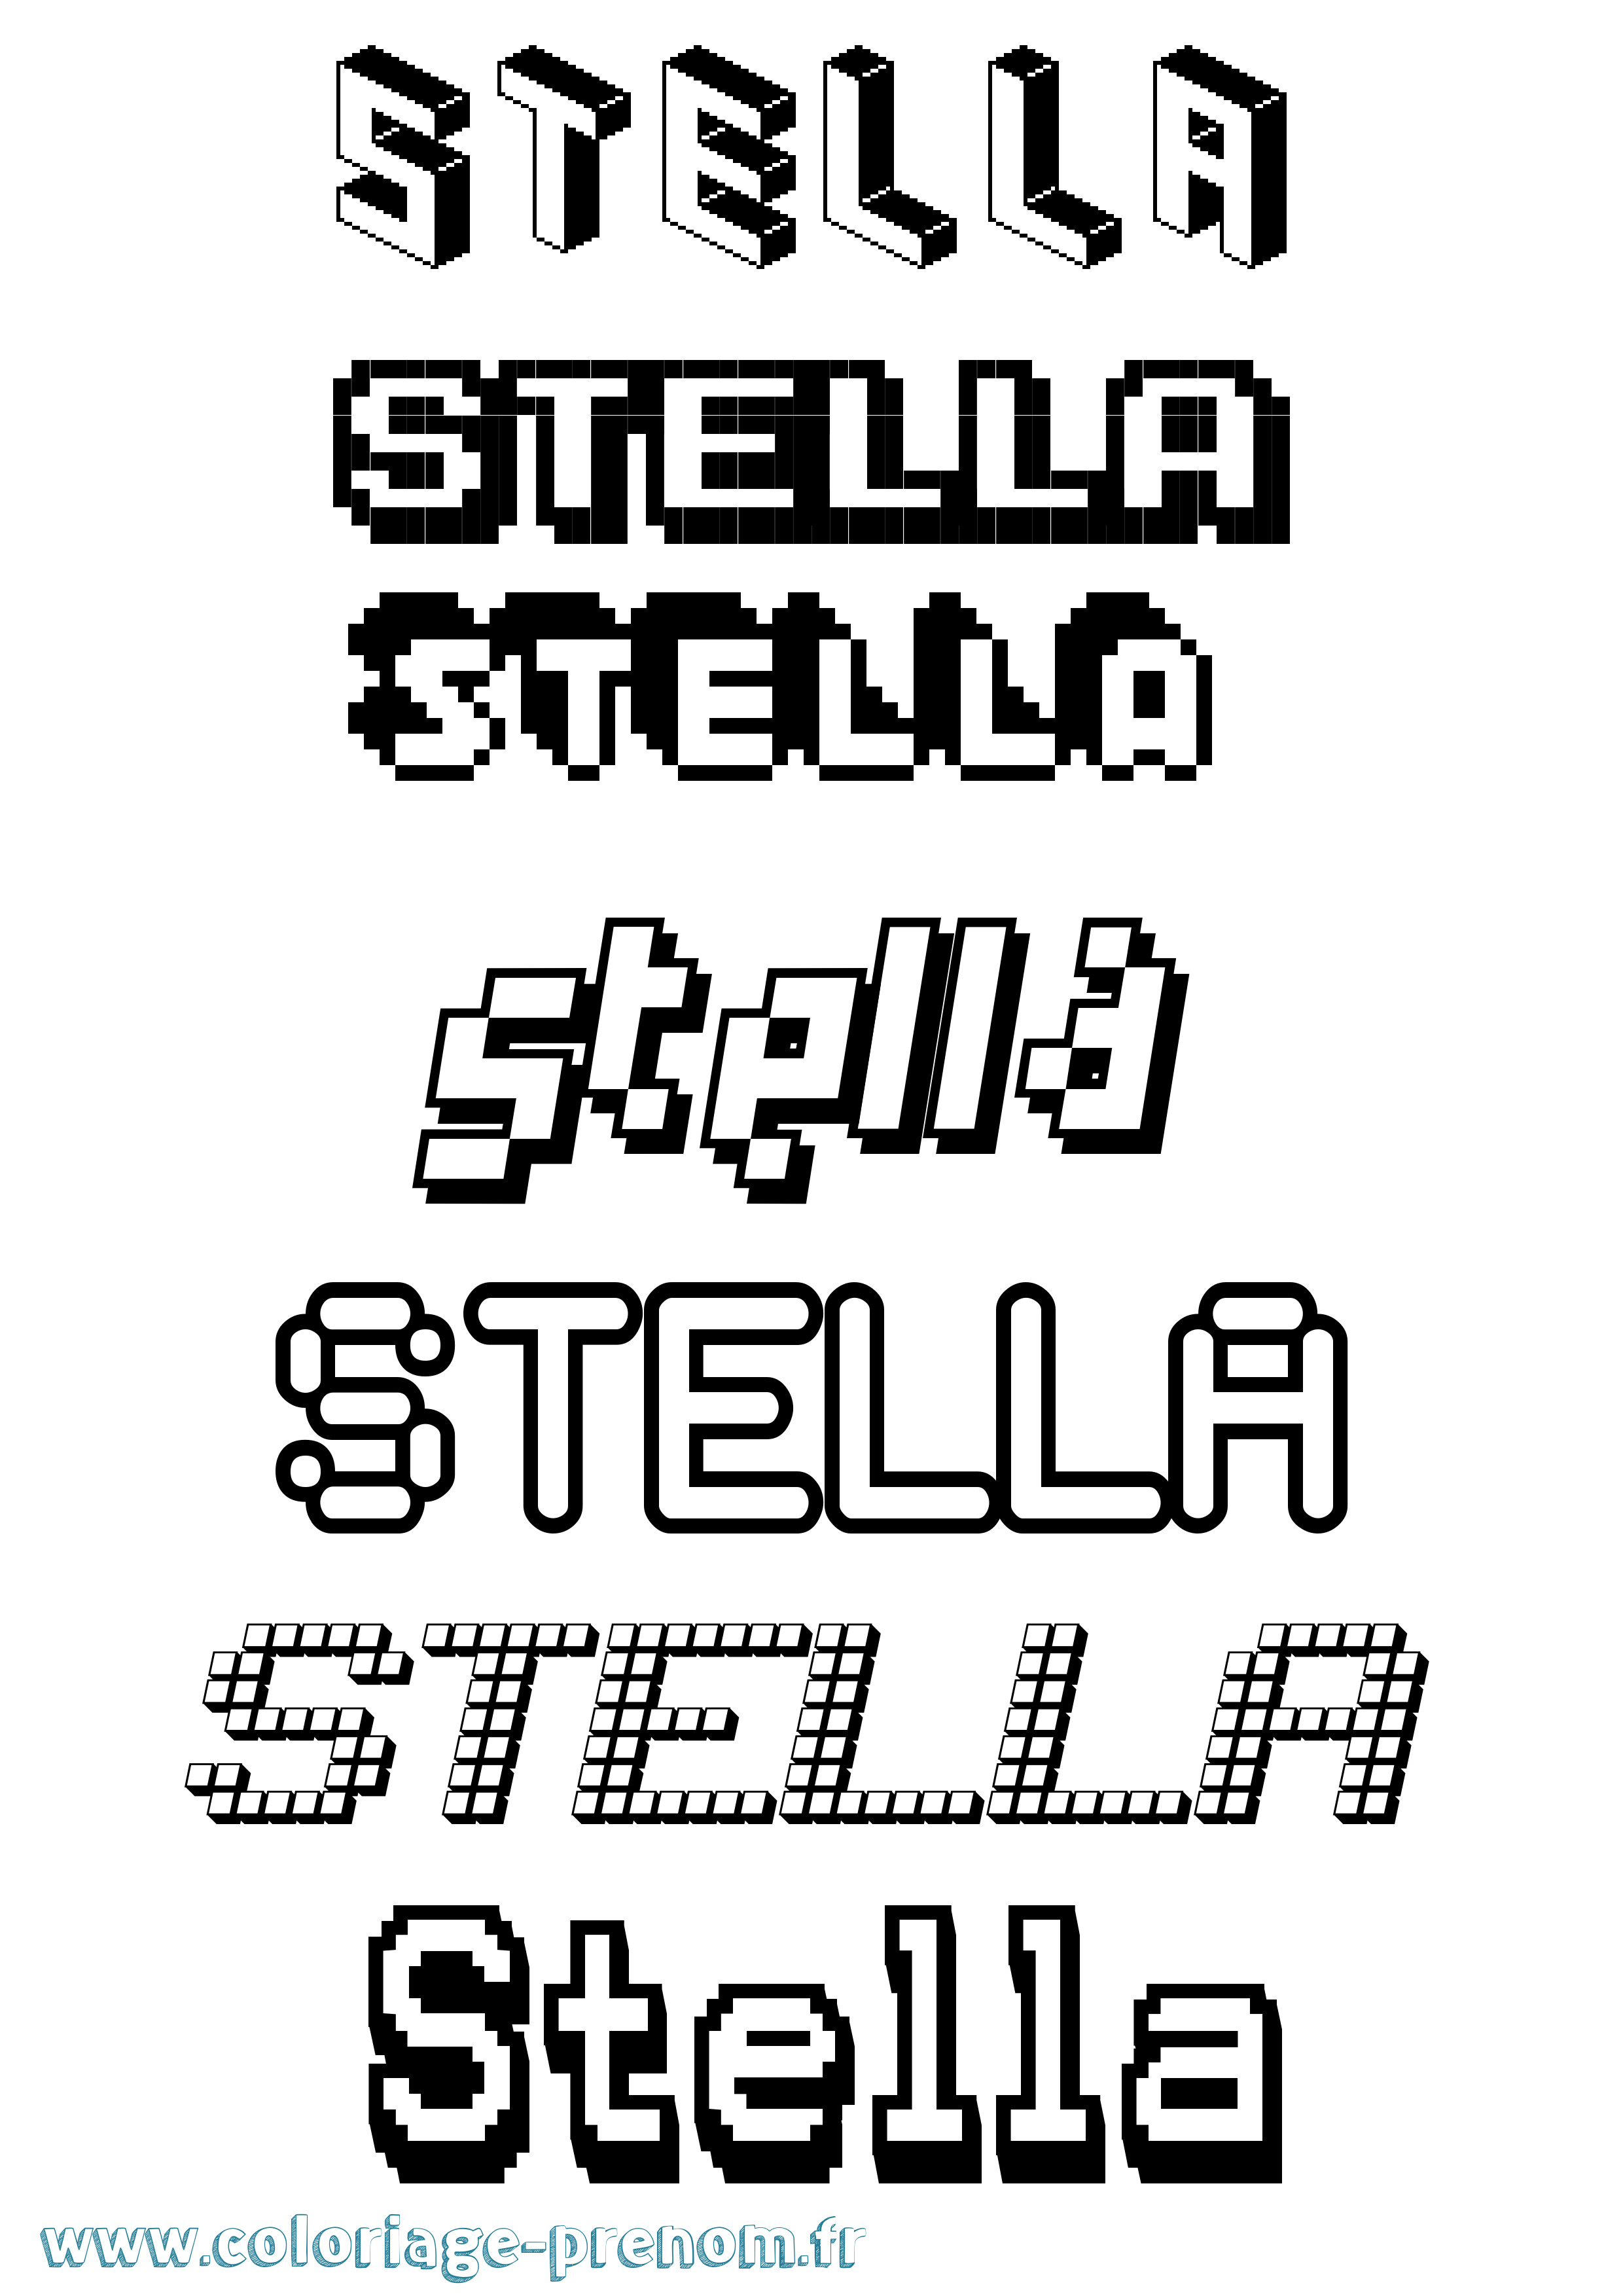 Coloriage prénom Stella Pixel